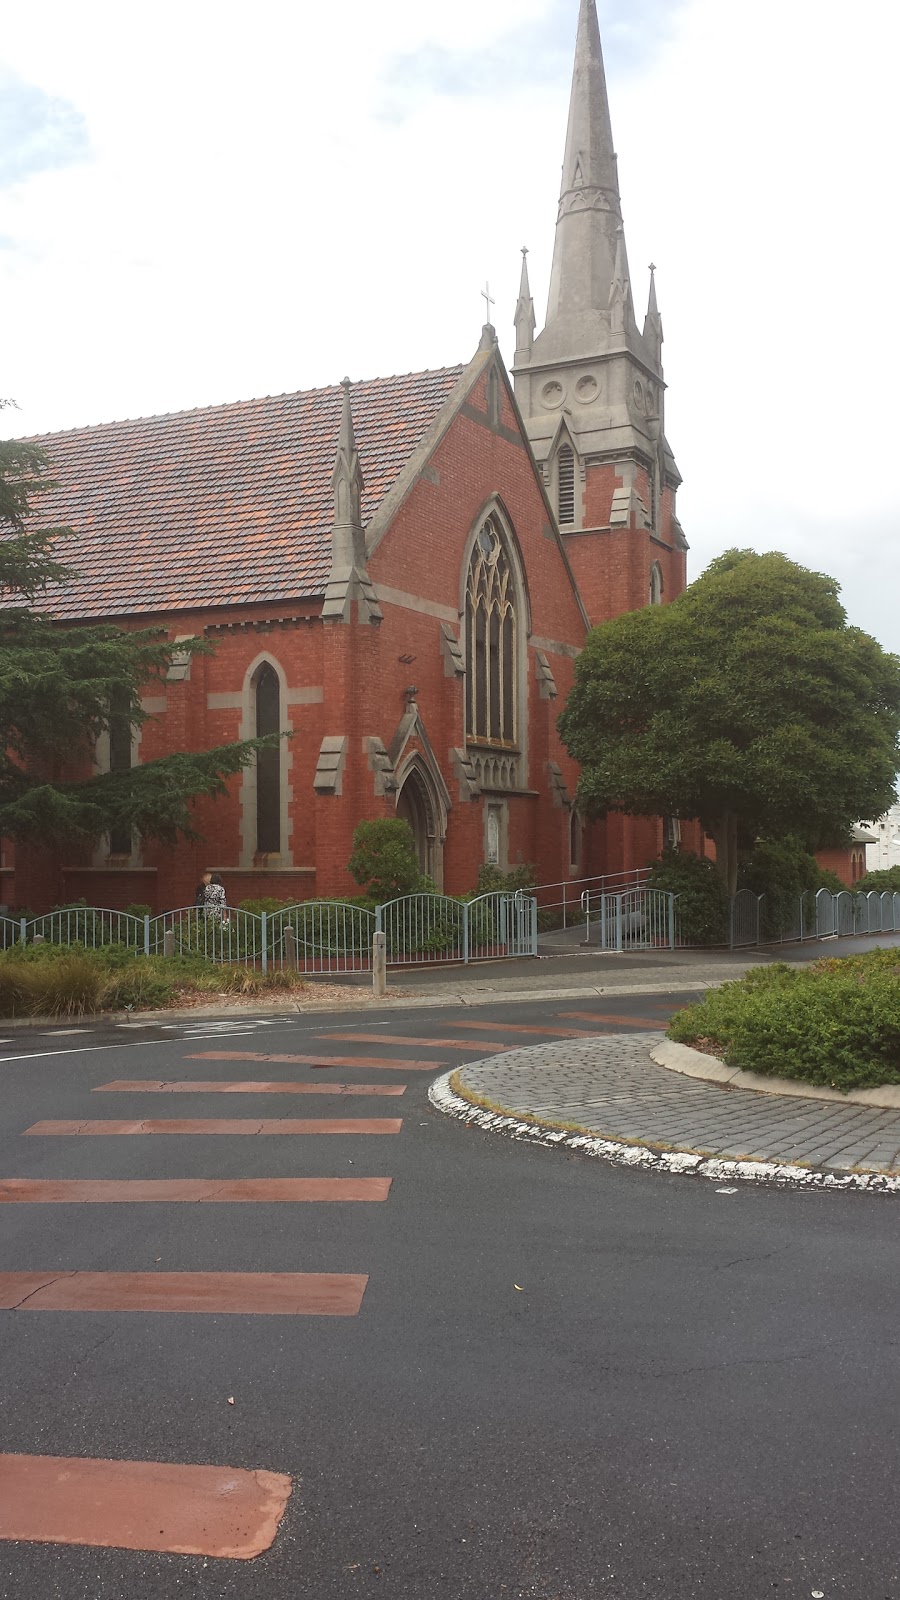 Croatian Catholic Centre Clifton Hill | 69 Hodgkinson St, Clifton Hill VIC 3068, Australia | Phone: (03) 9482 3479